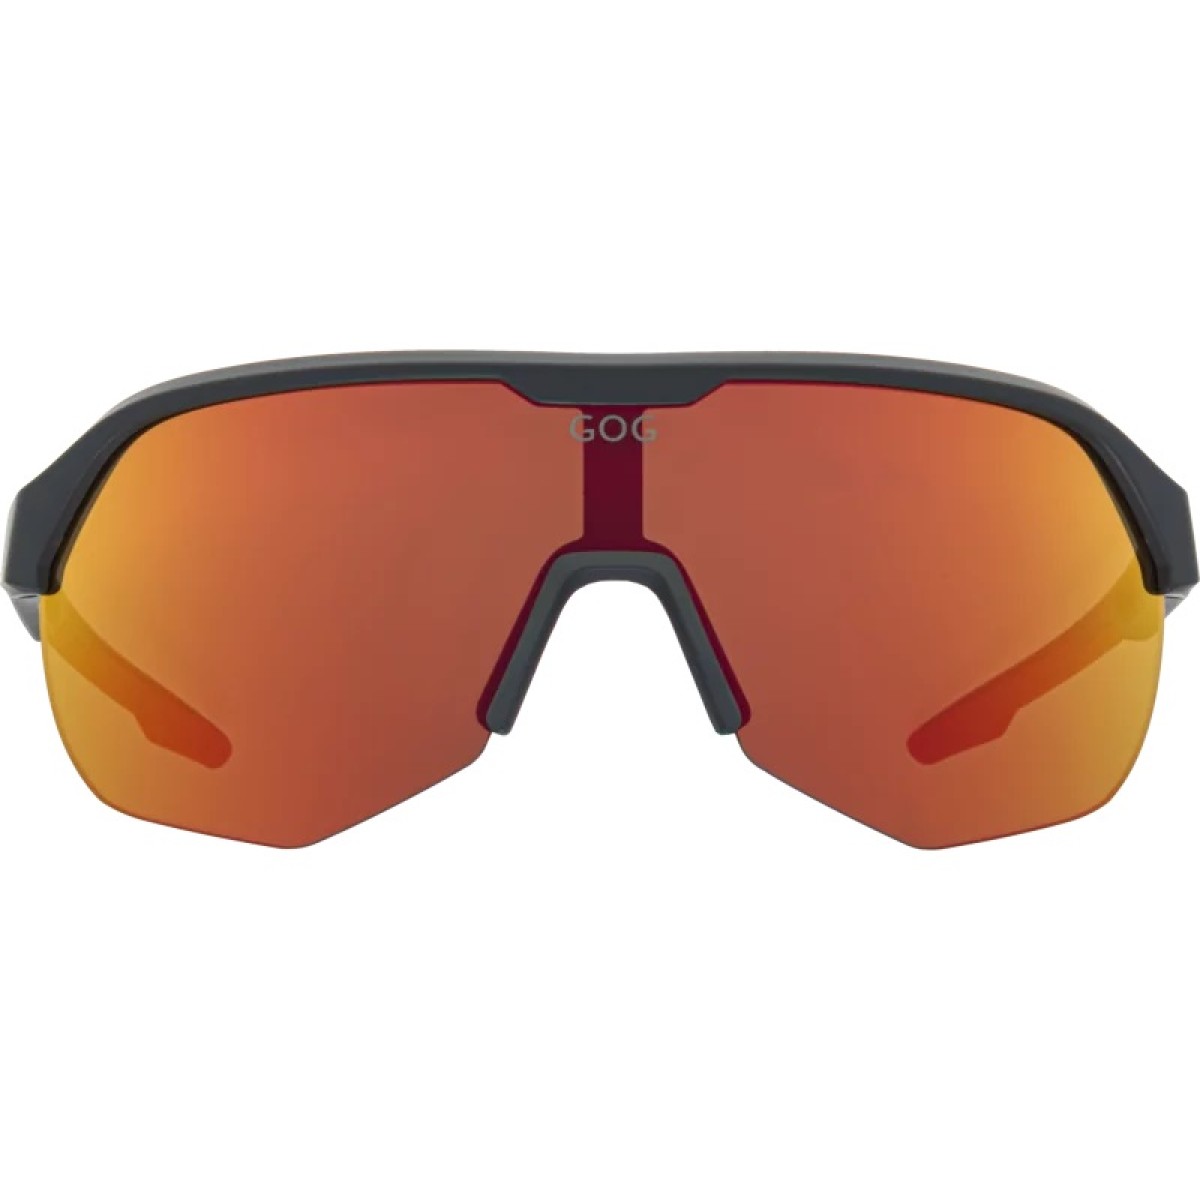 Sunglasses E501-2 GOG - view 2